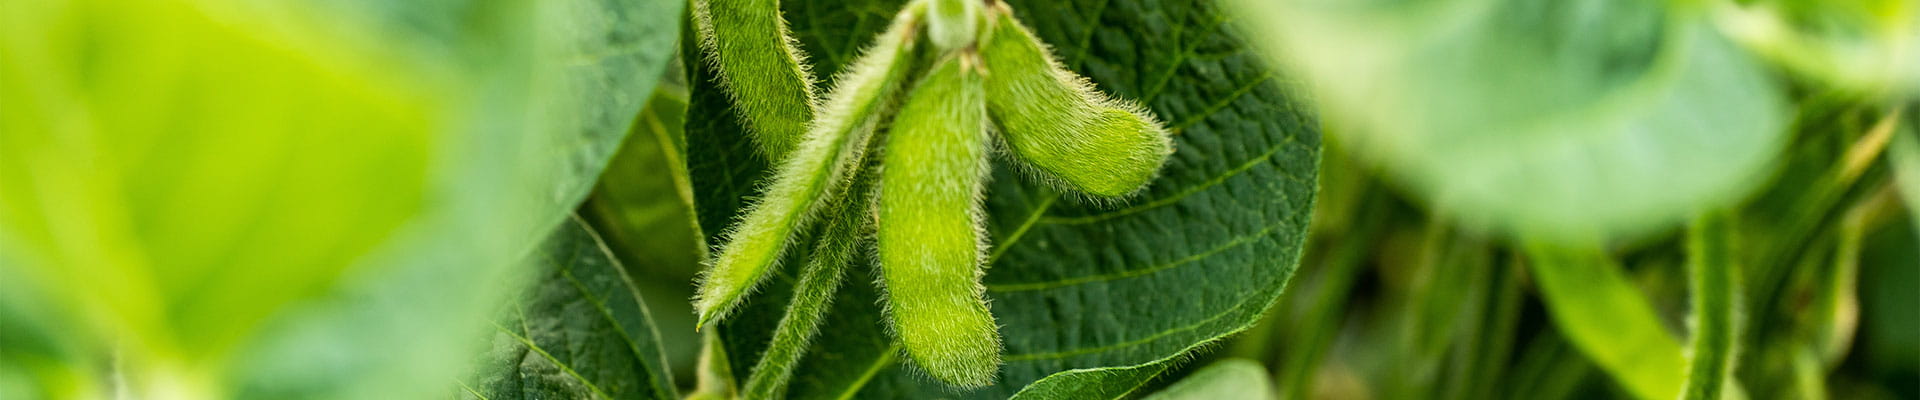 Soybean plants